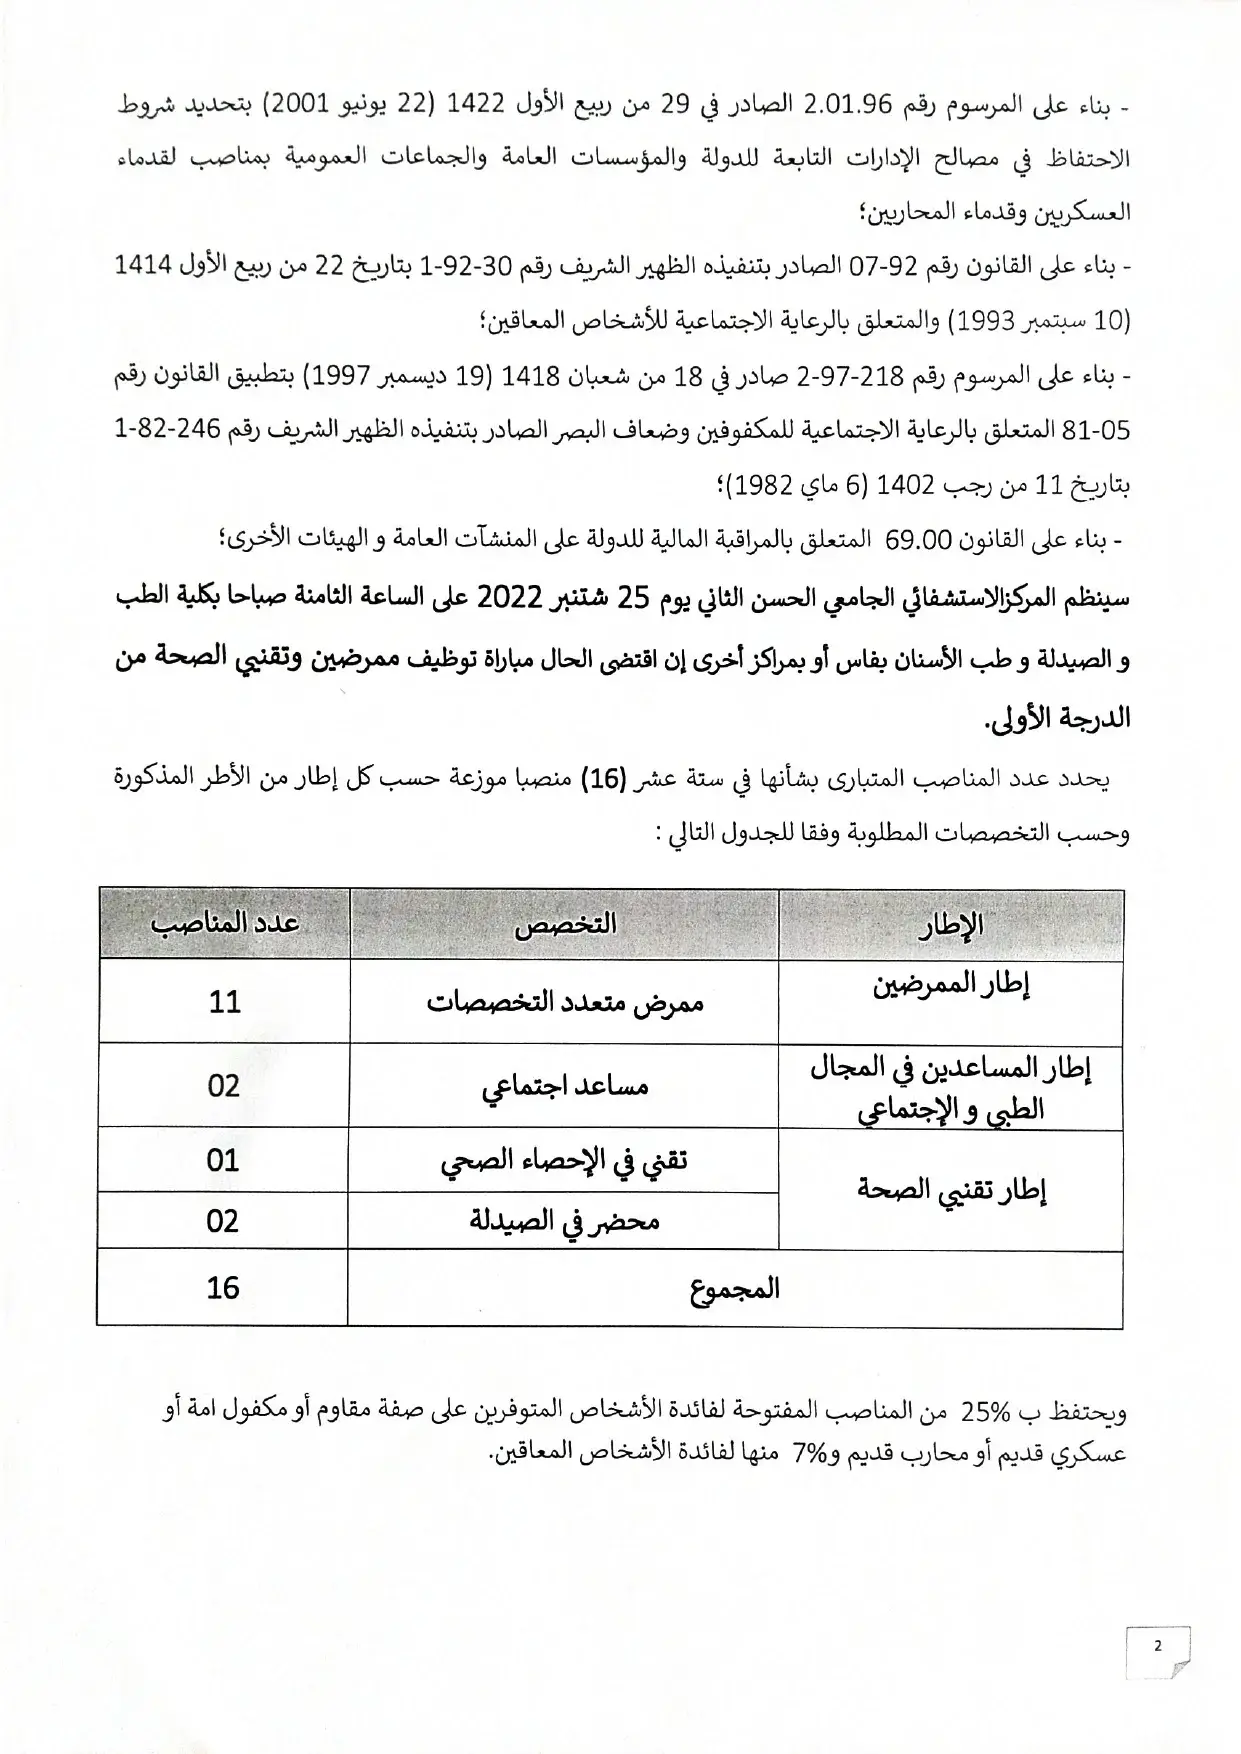 Concours CHU Hassan II Fès 2022 (16 postes)